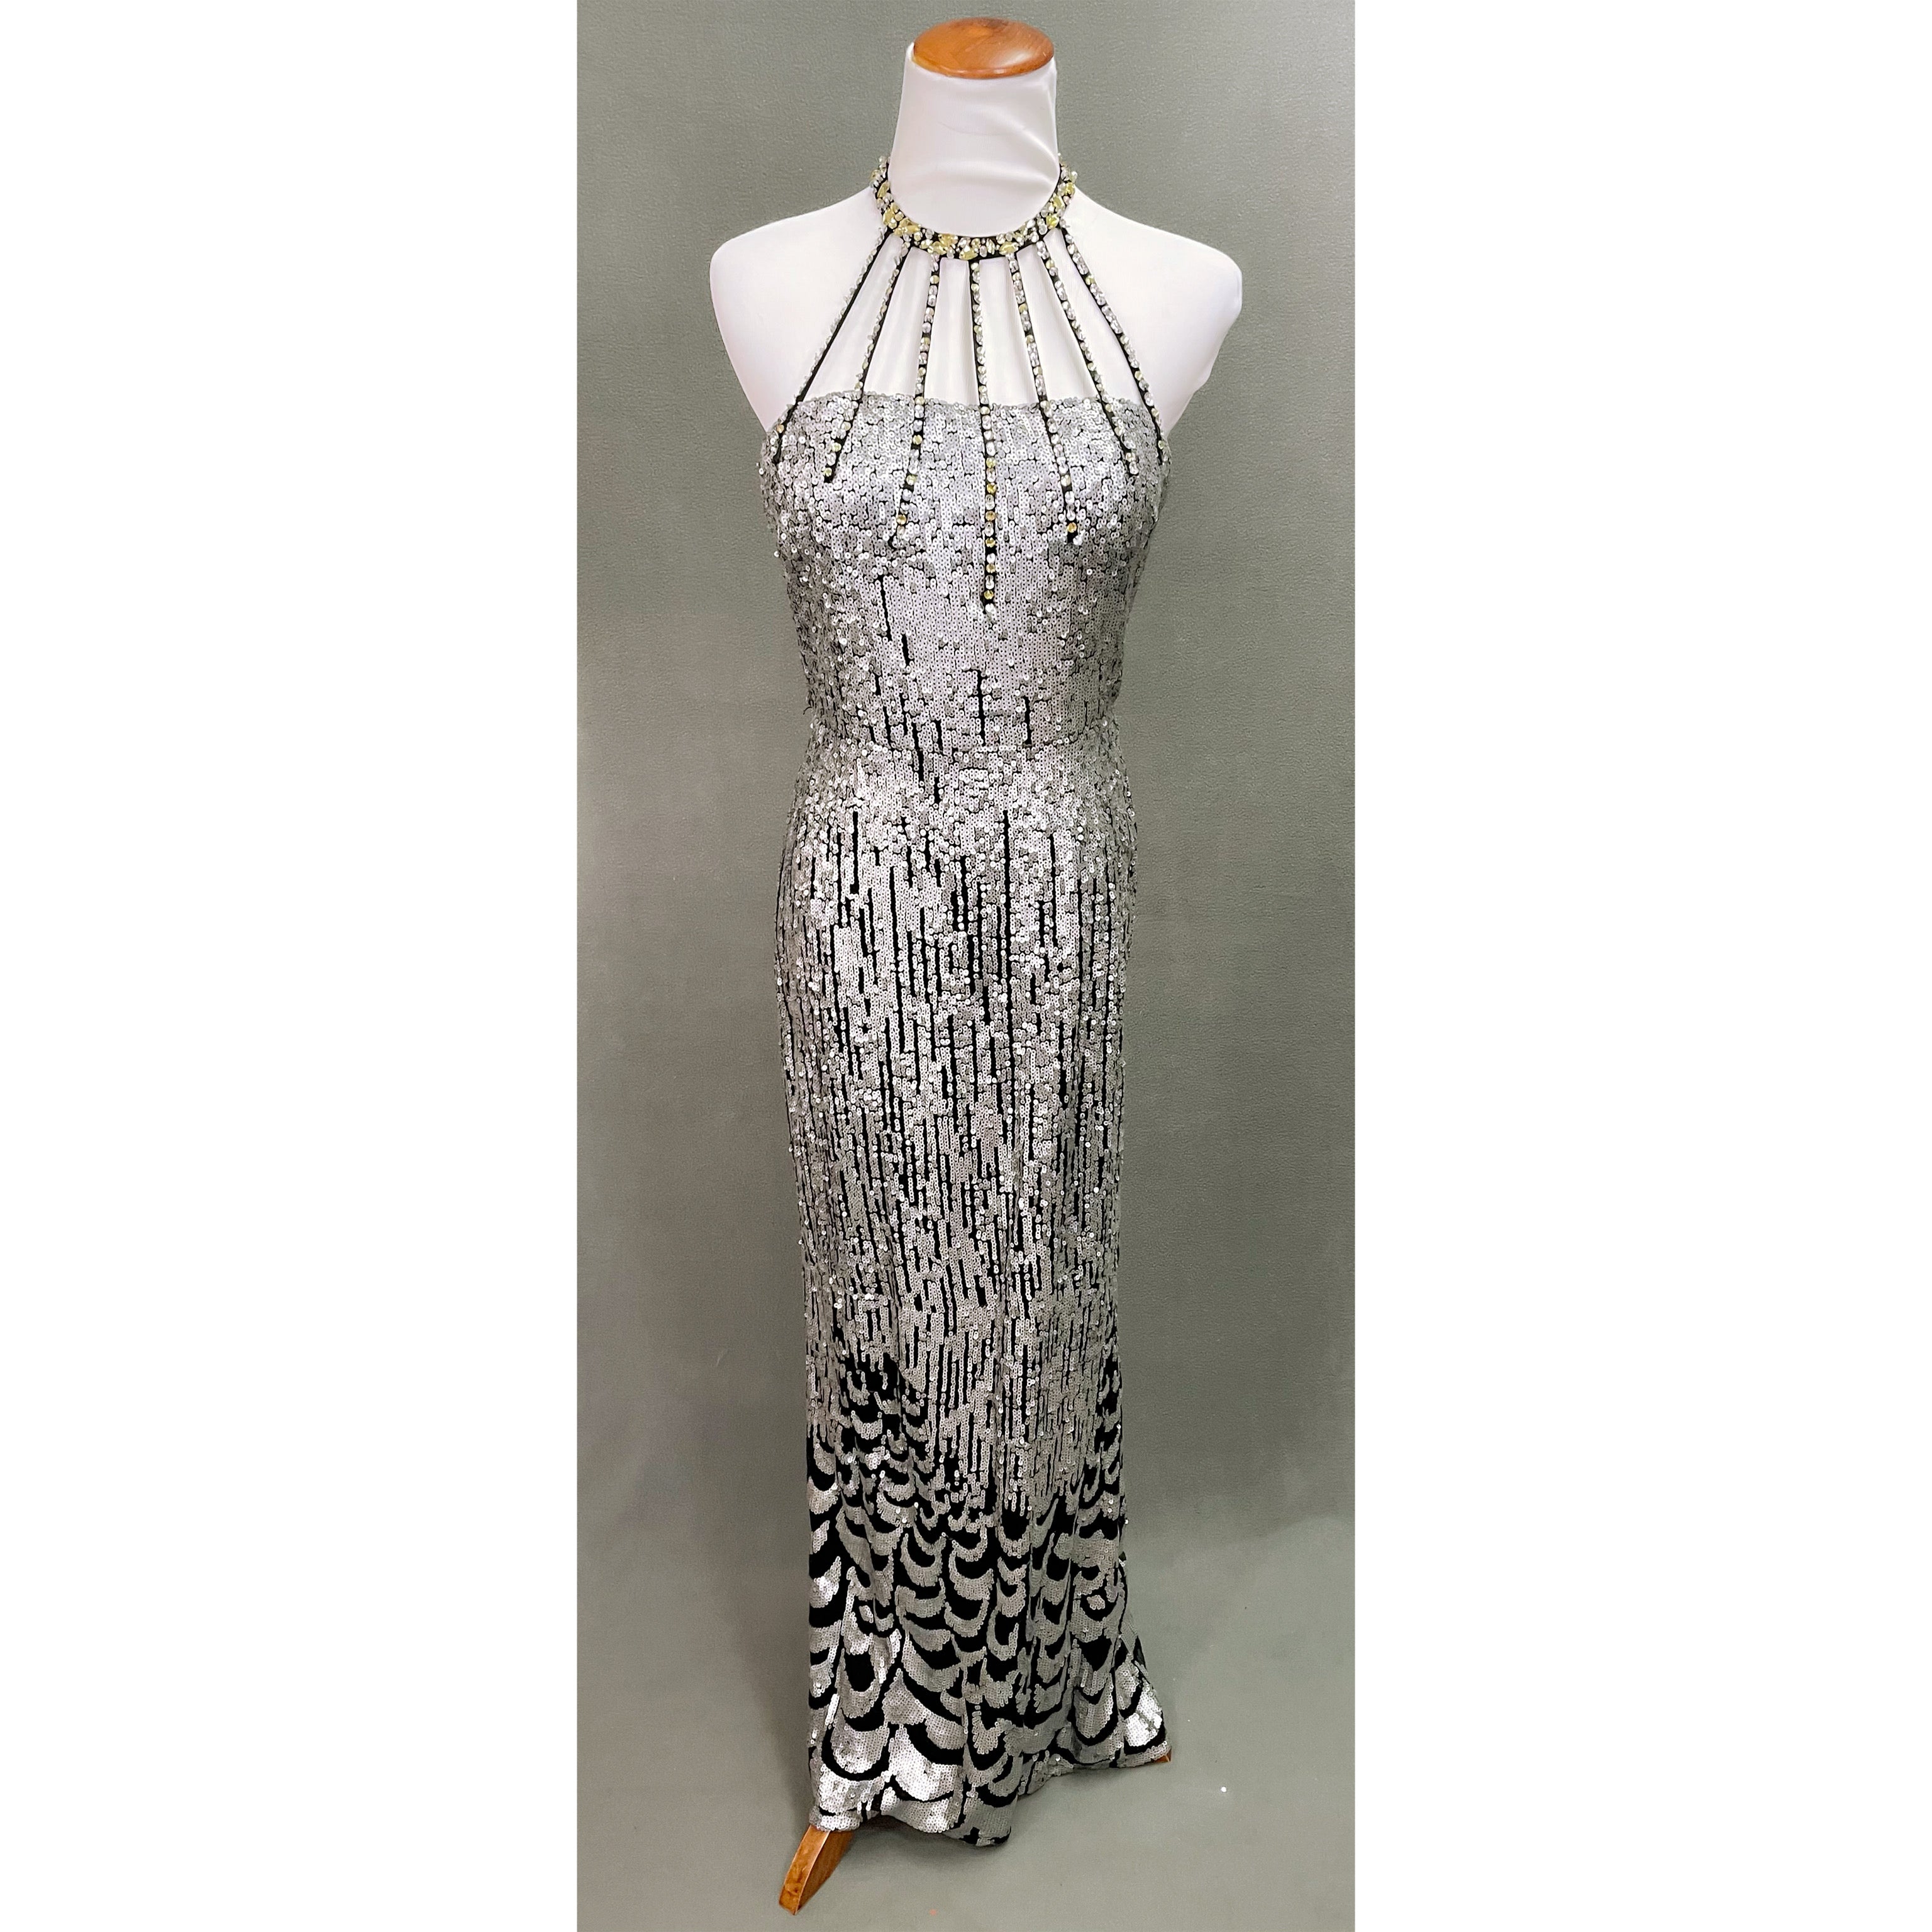 Faviana black & silver dress, size 6